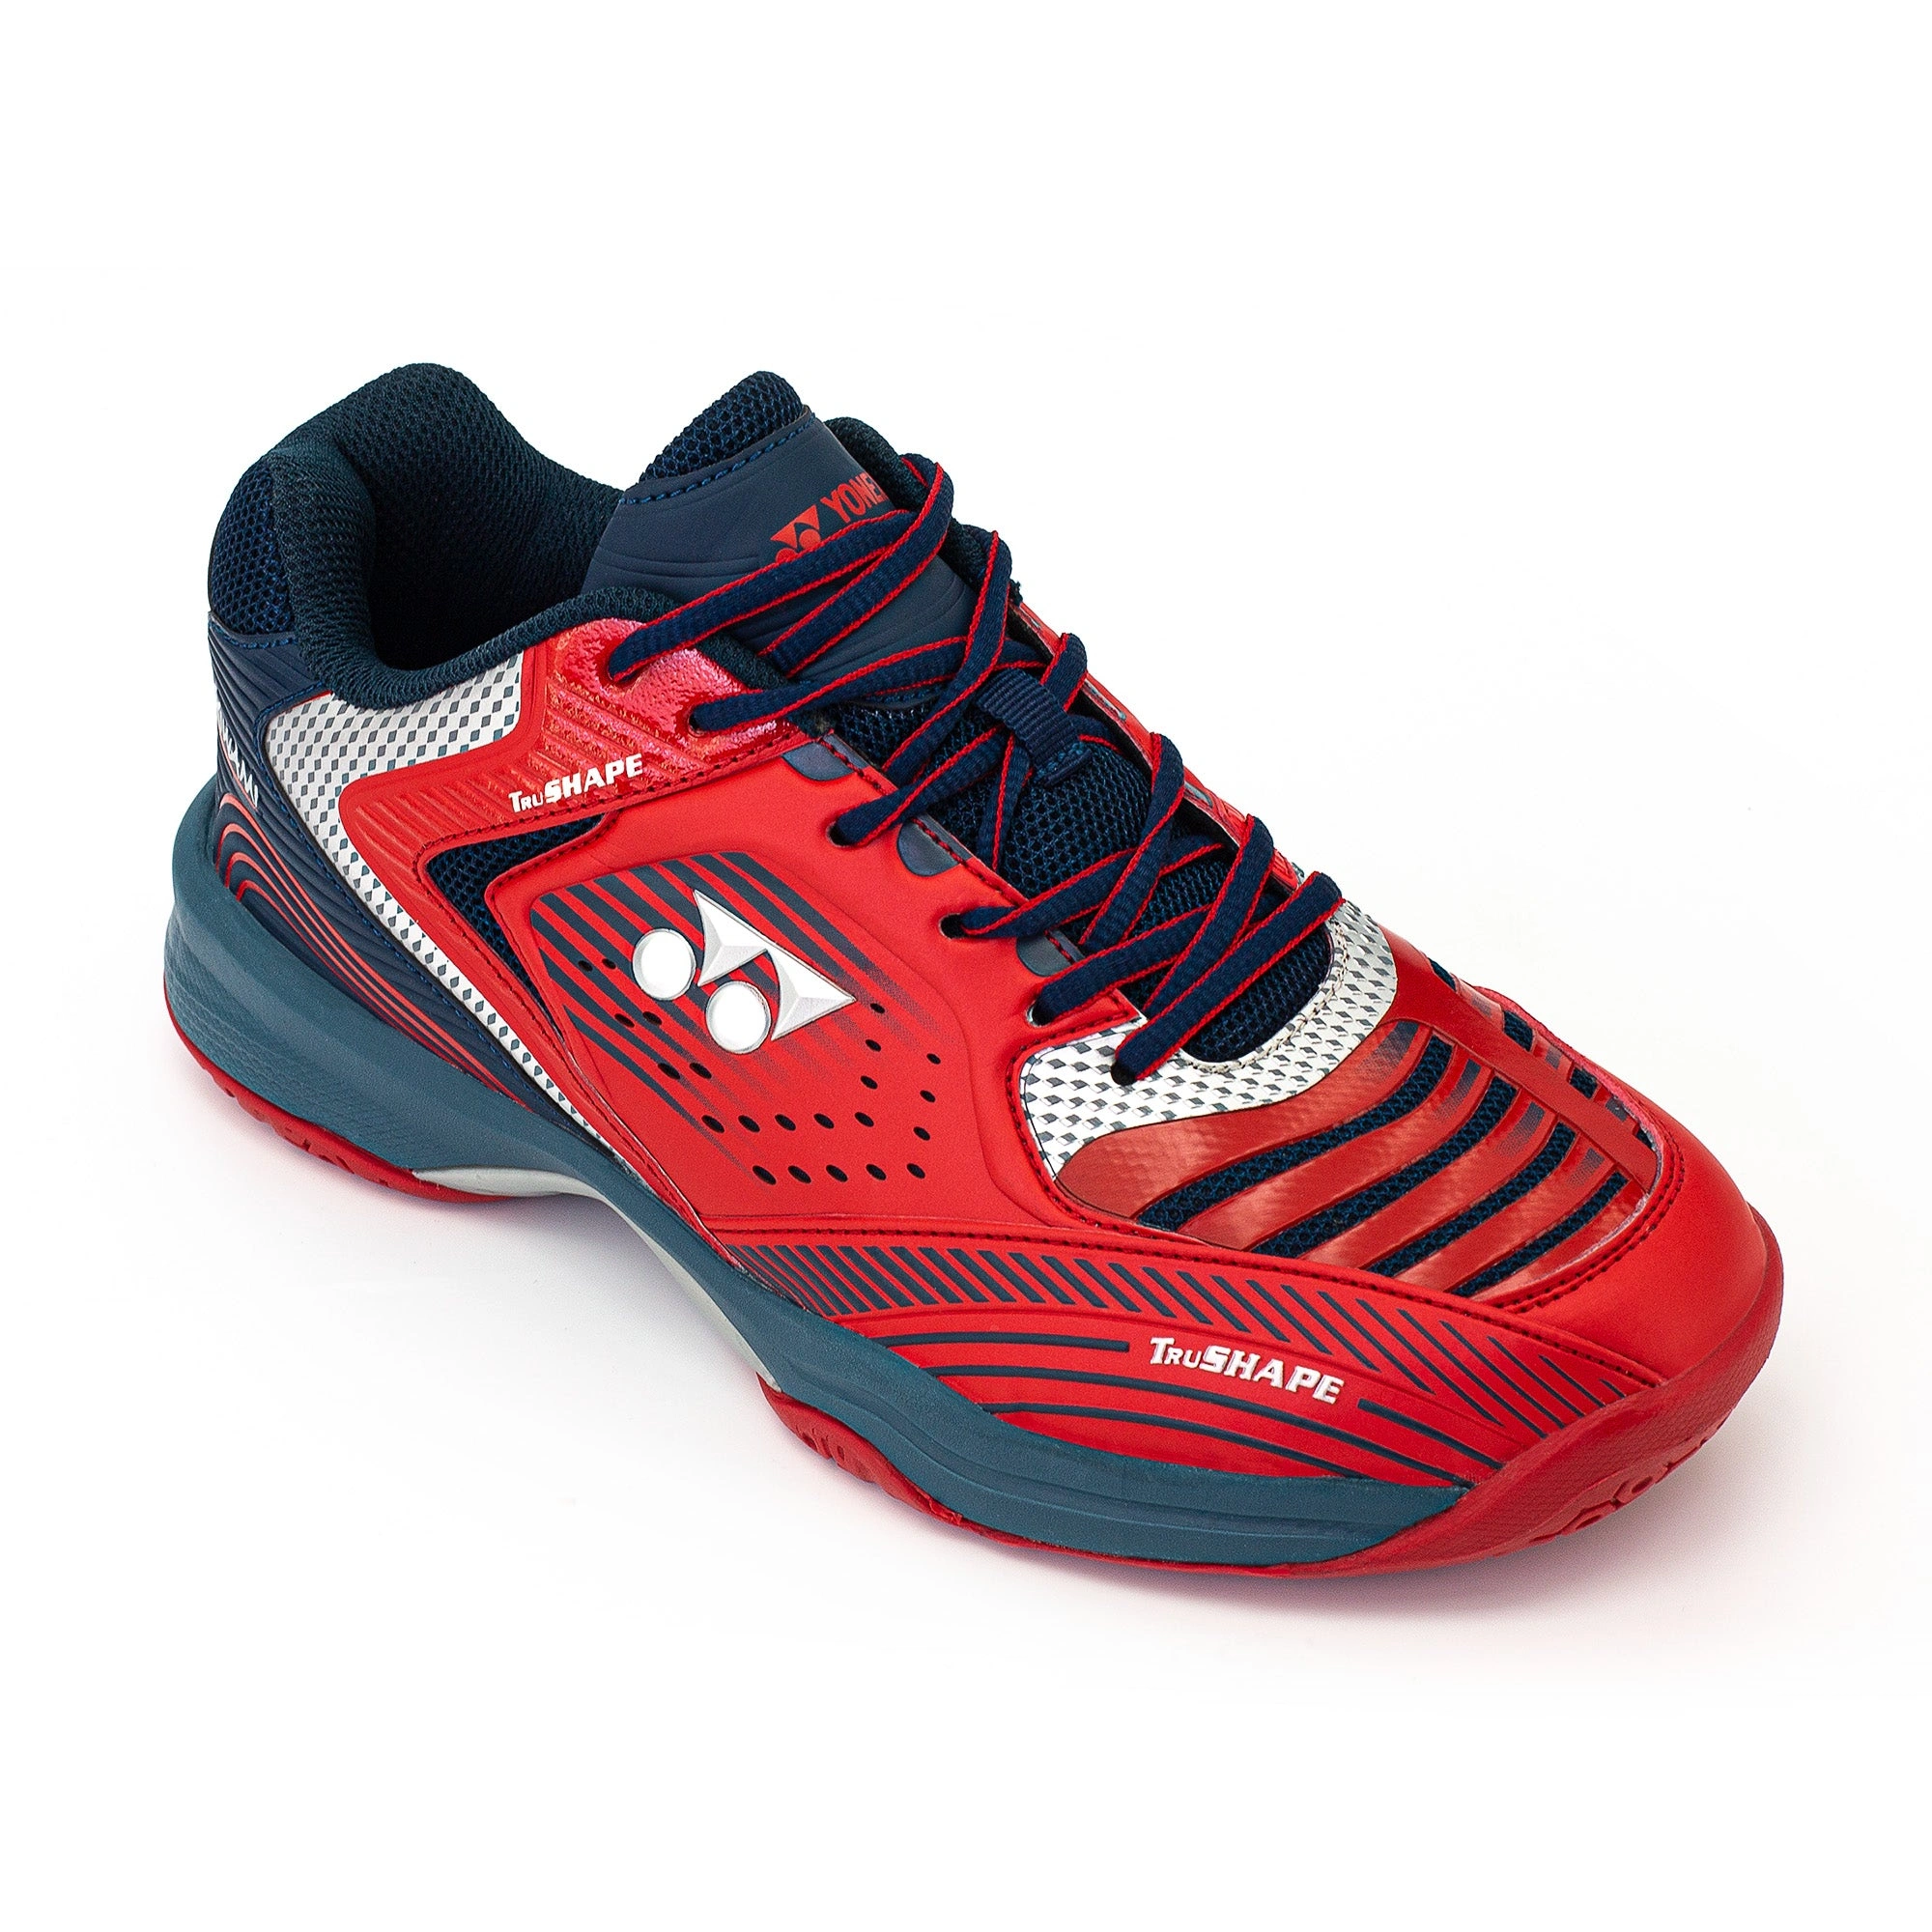 Yonex Kiwami Badminton Shoes For Men-FADDED RED DARK OCEANIC-9-1